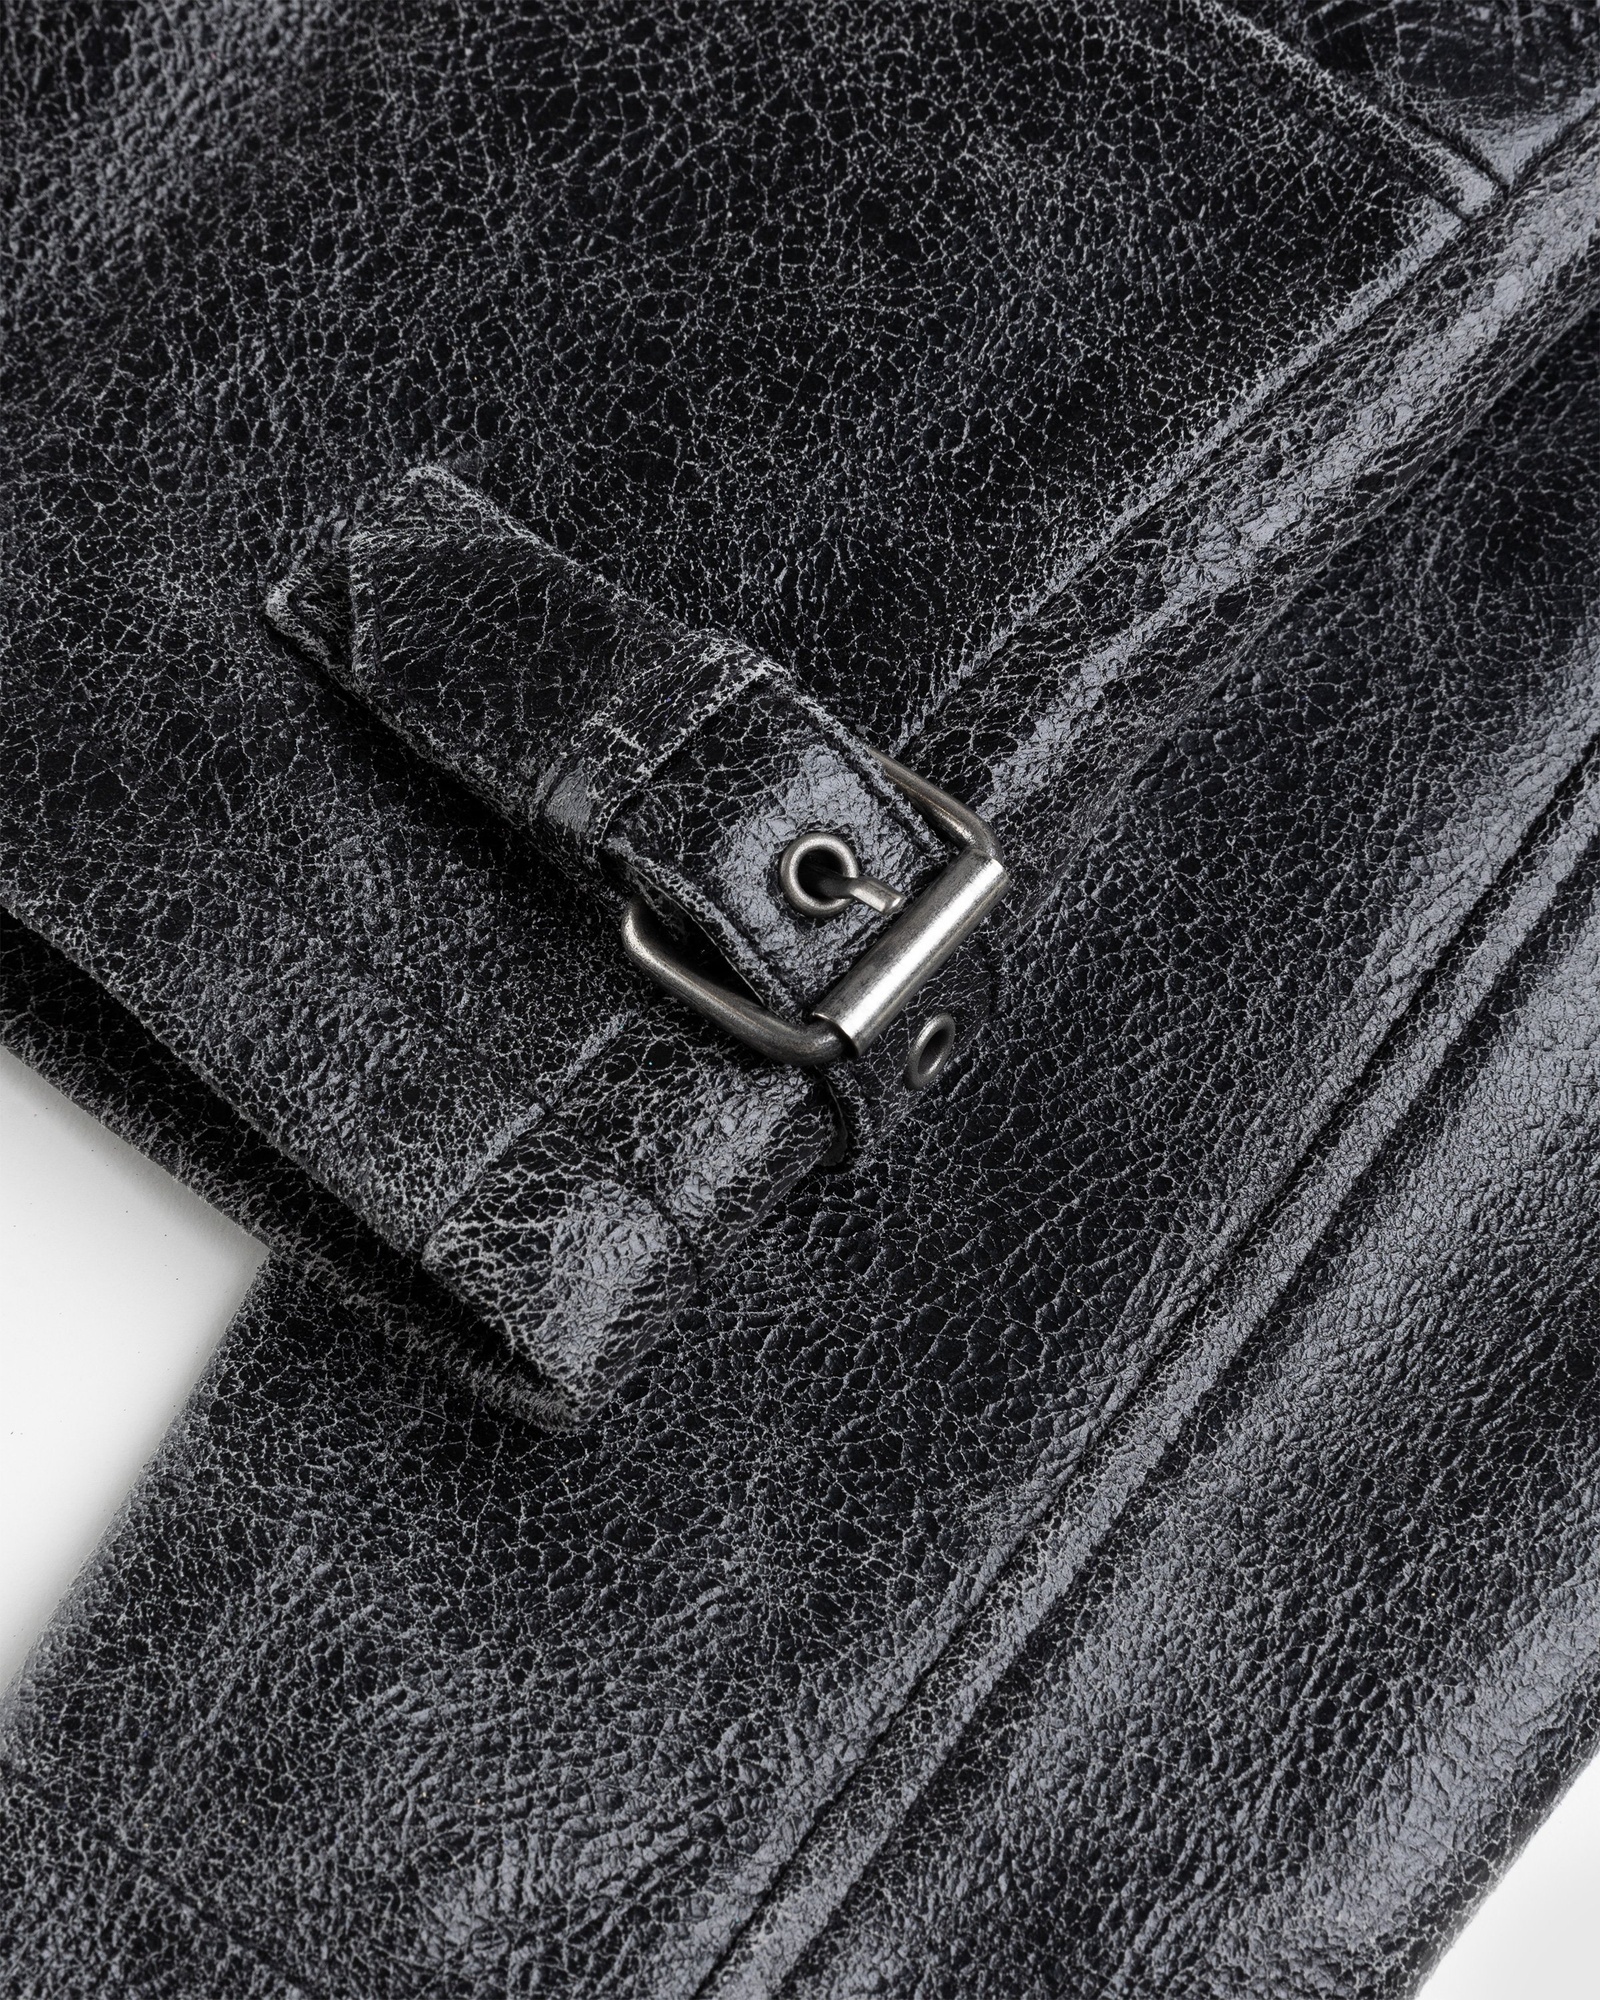 Guess USA – Crackle Leather Jacket Black | Highsnobiety Shop